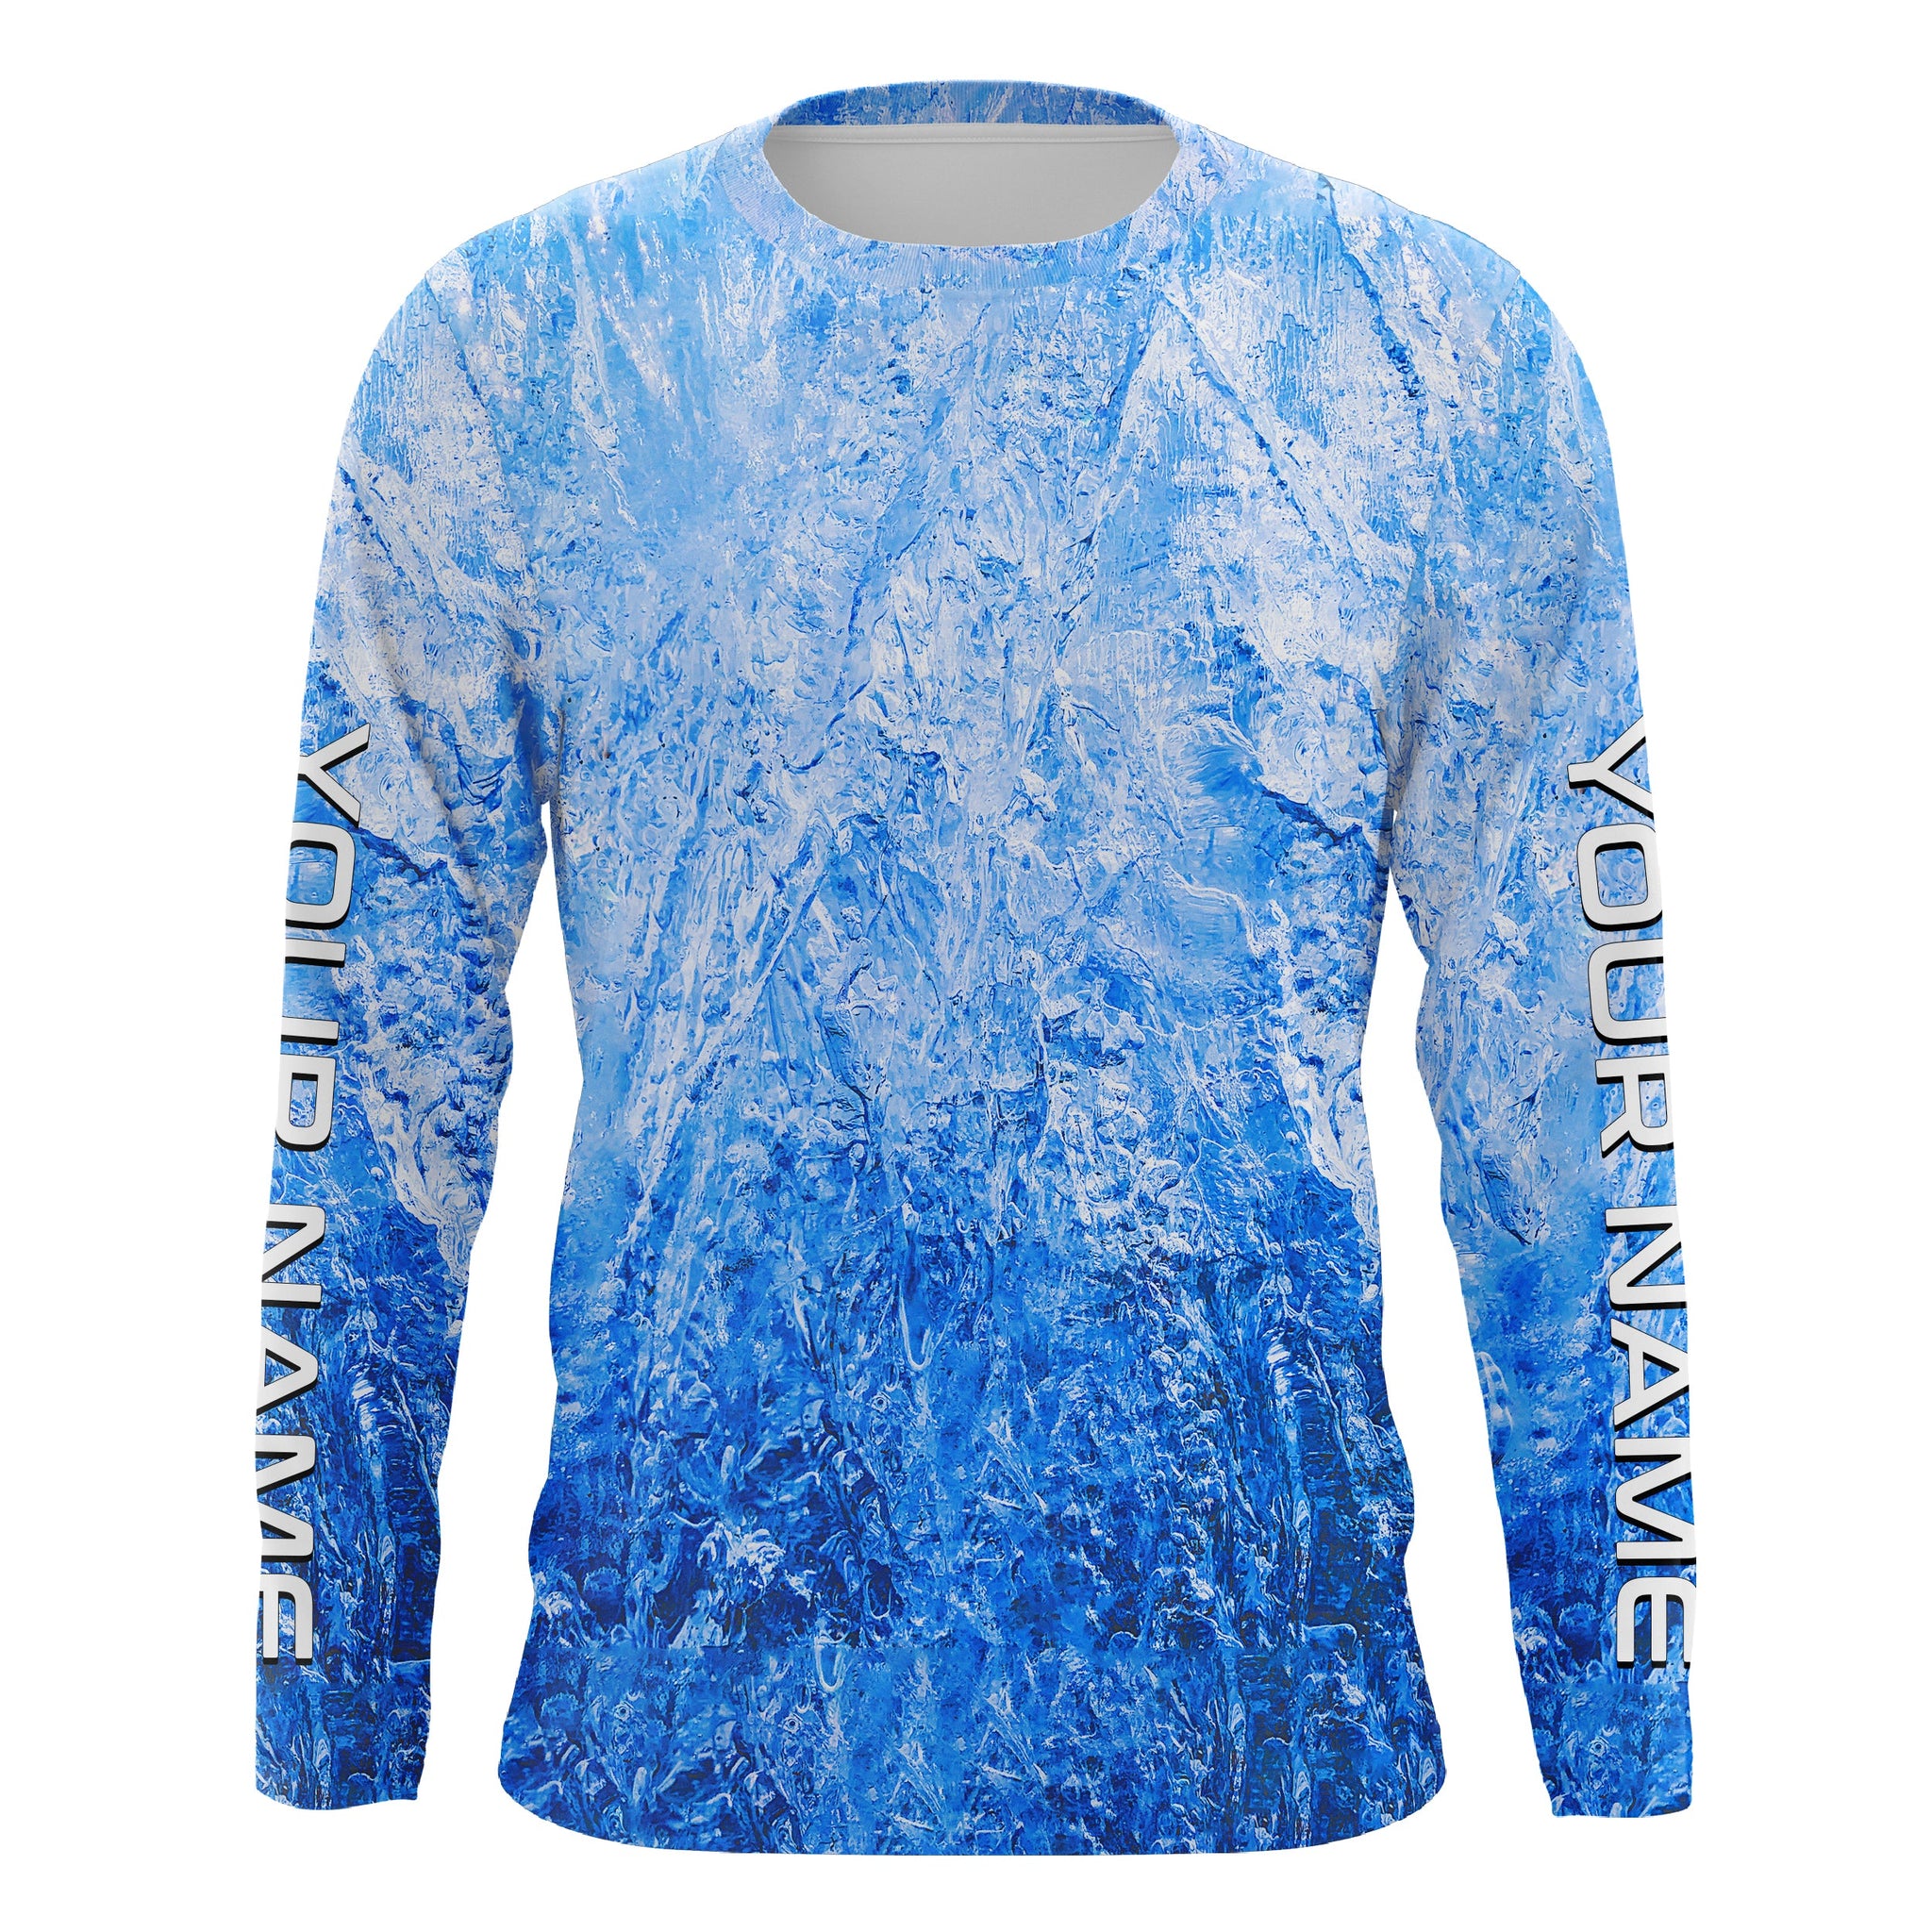 Ice camo Ice Fishing Shirts, Personalized Ice Fishing Clothing for